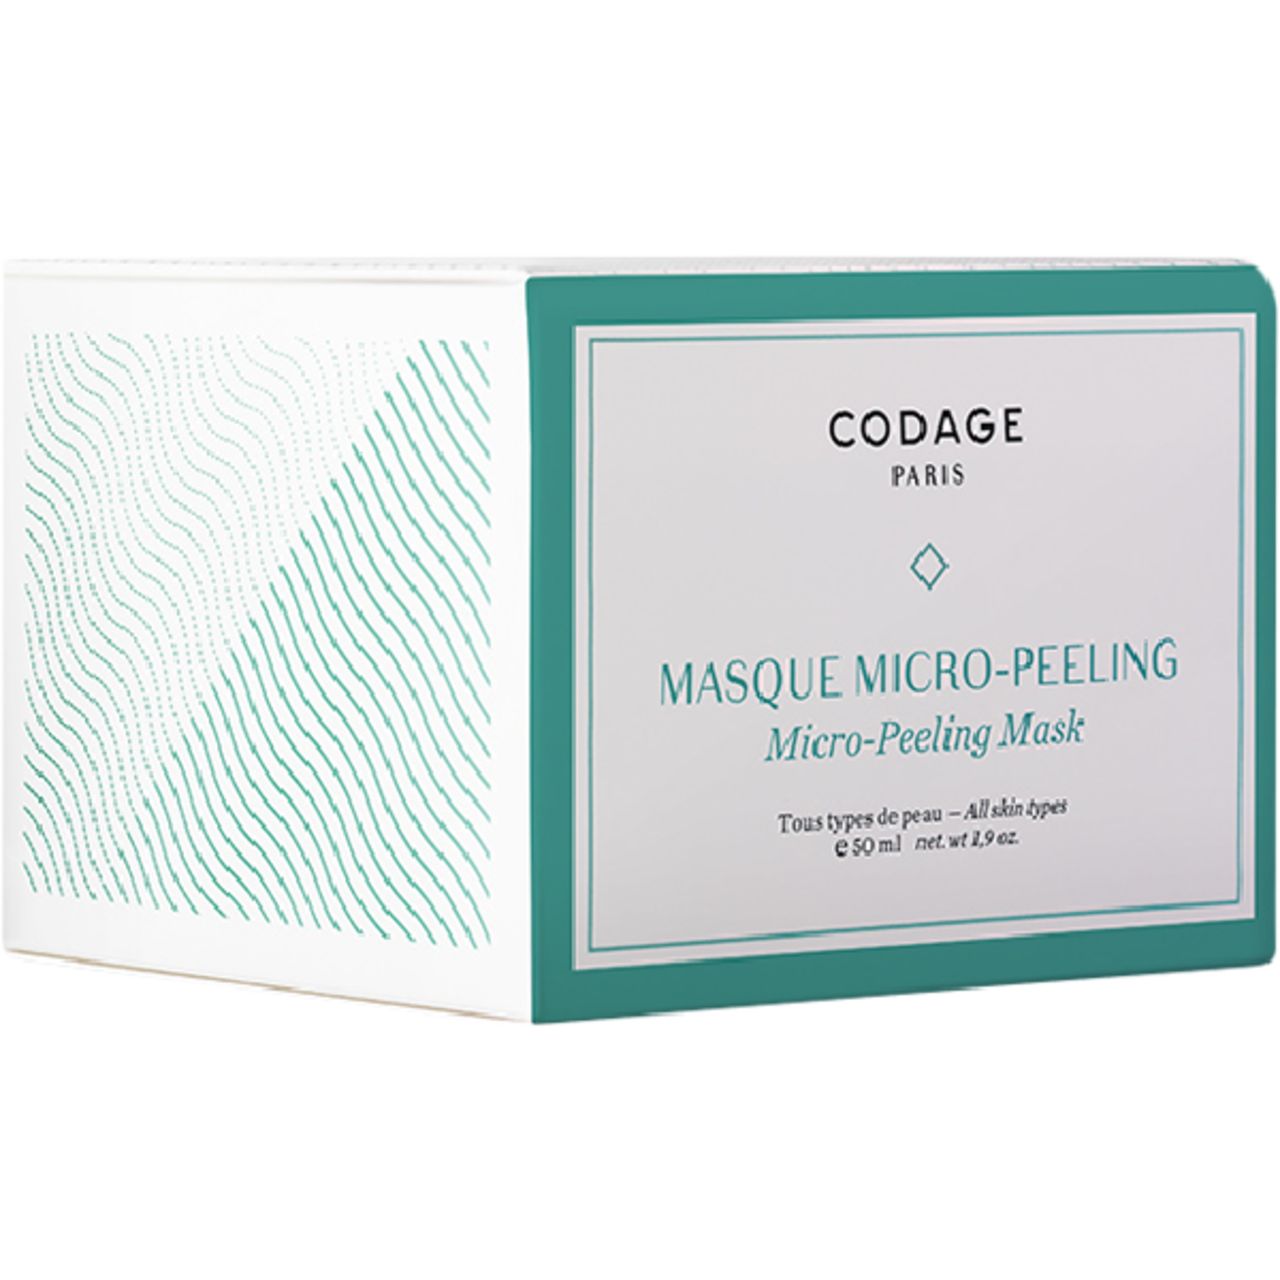 Codage, Masque Micro-Peeling